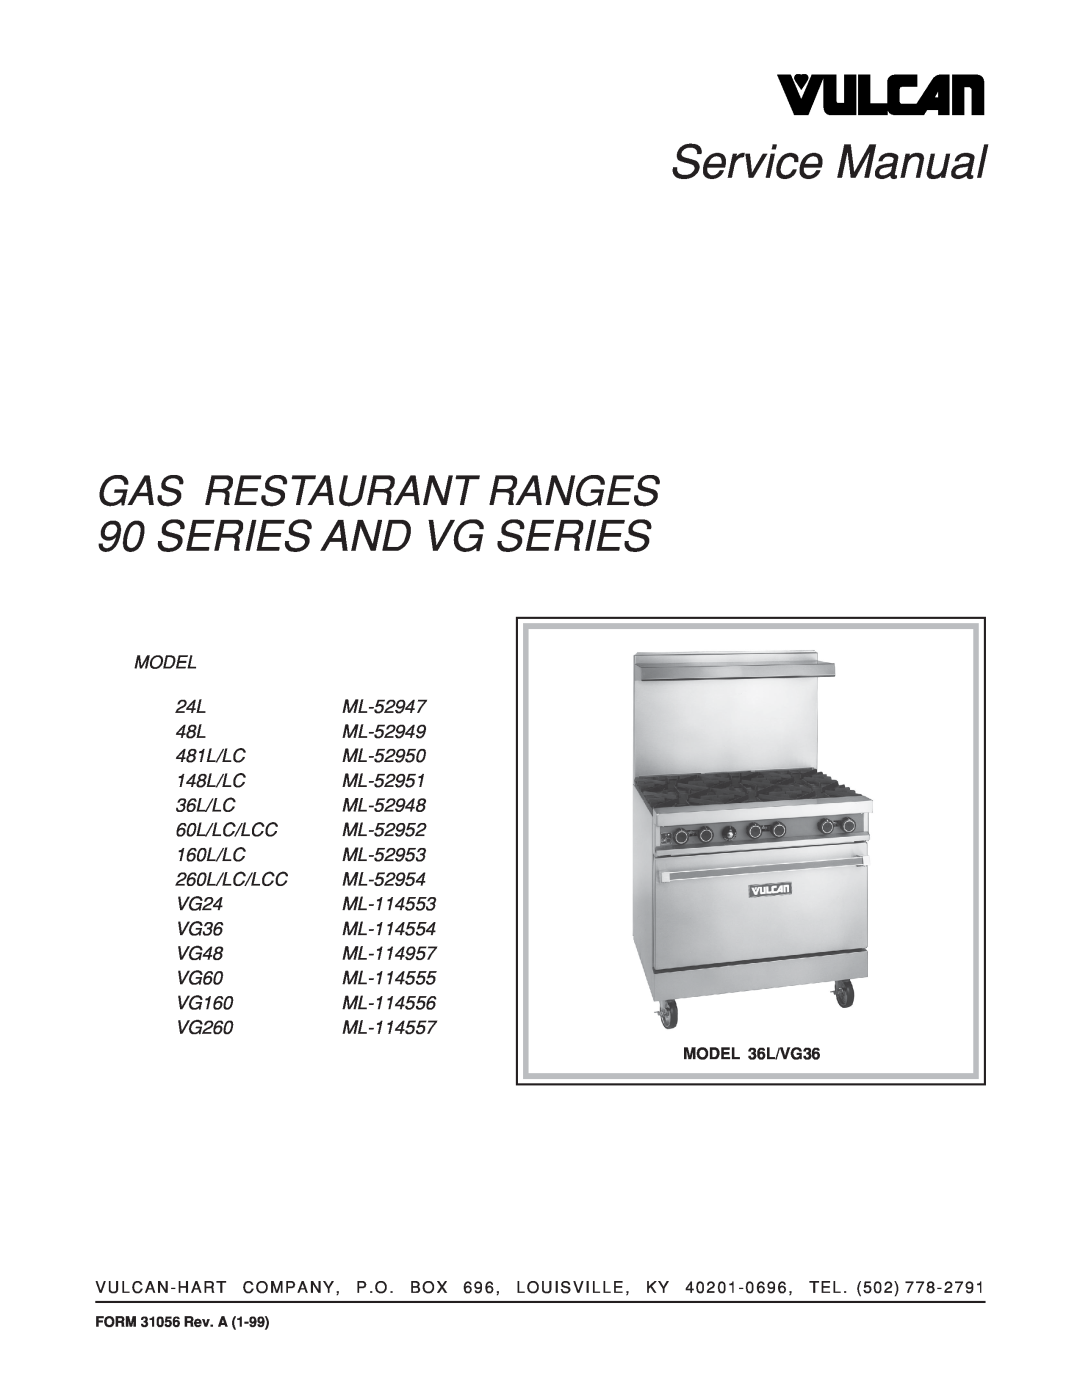 Vulcan-Hart ML-52947, ML-52953, ML-52950 service manual Service Manual, Series And Vg Series, Gas Restaurant Ranges 